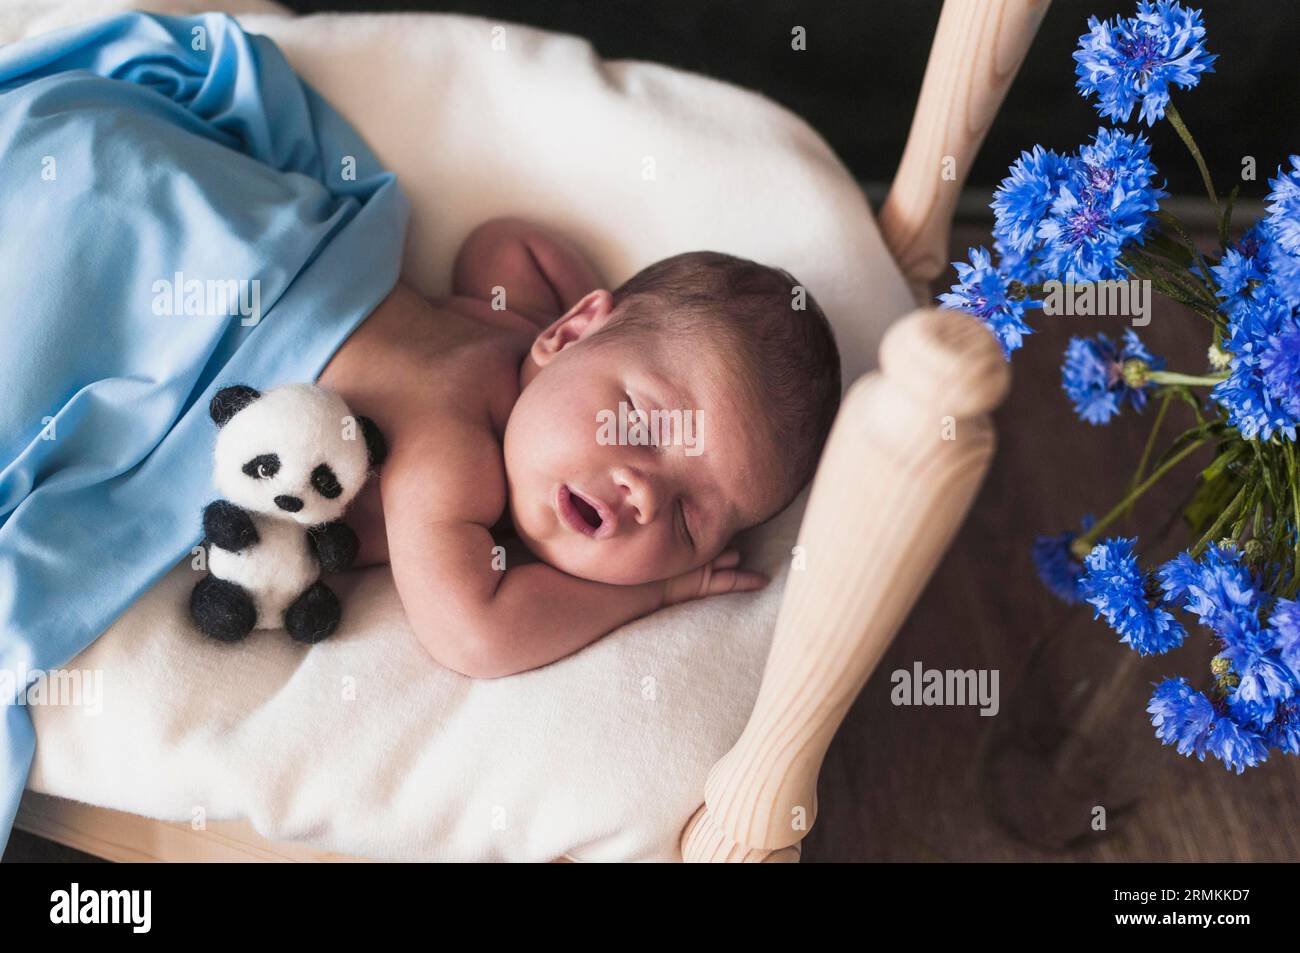 Tiny child blue blanket Stock Photo